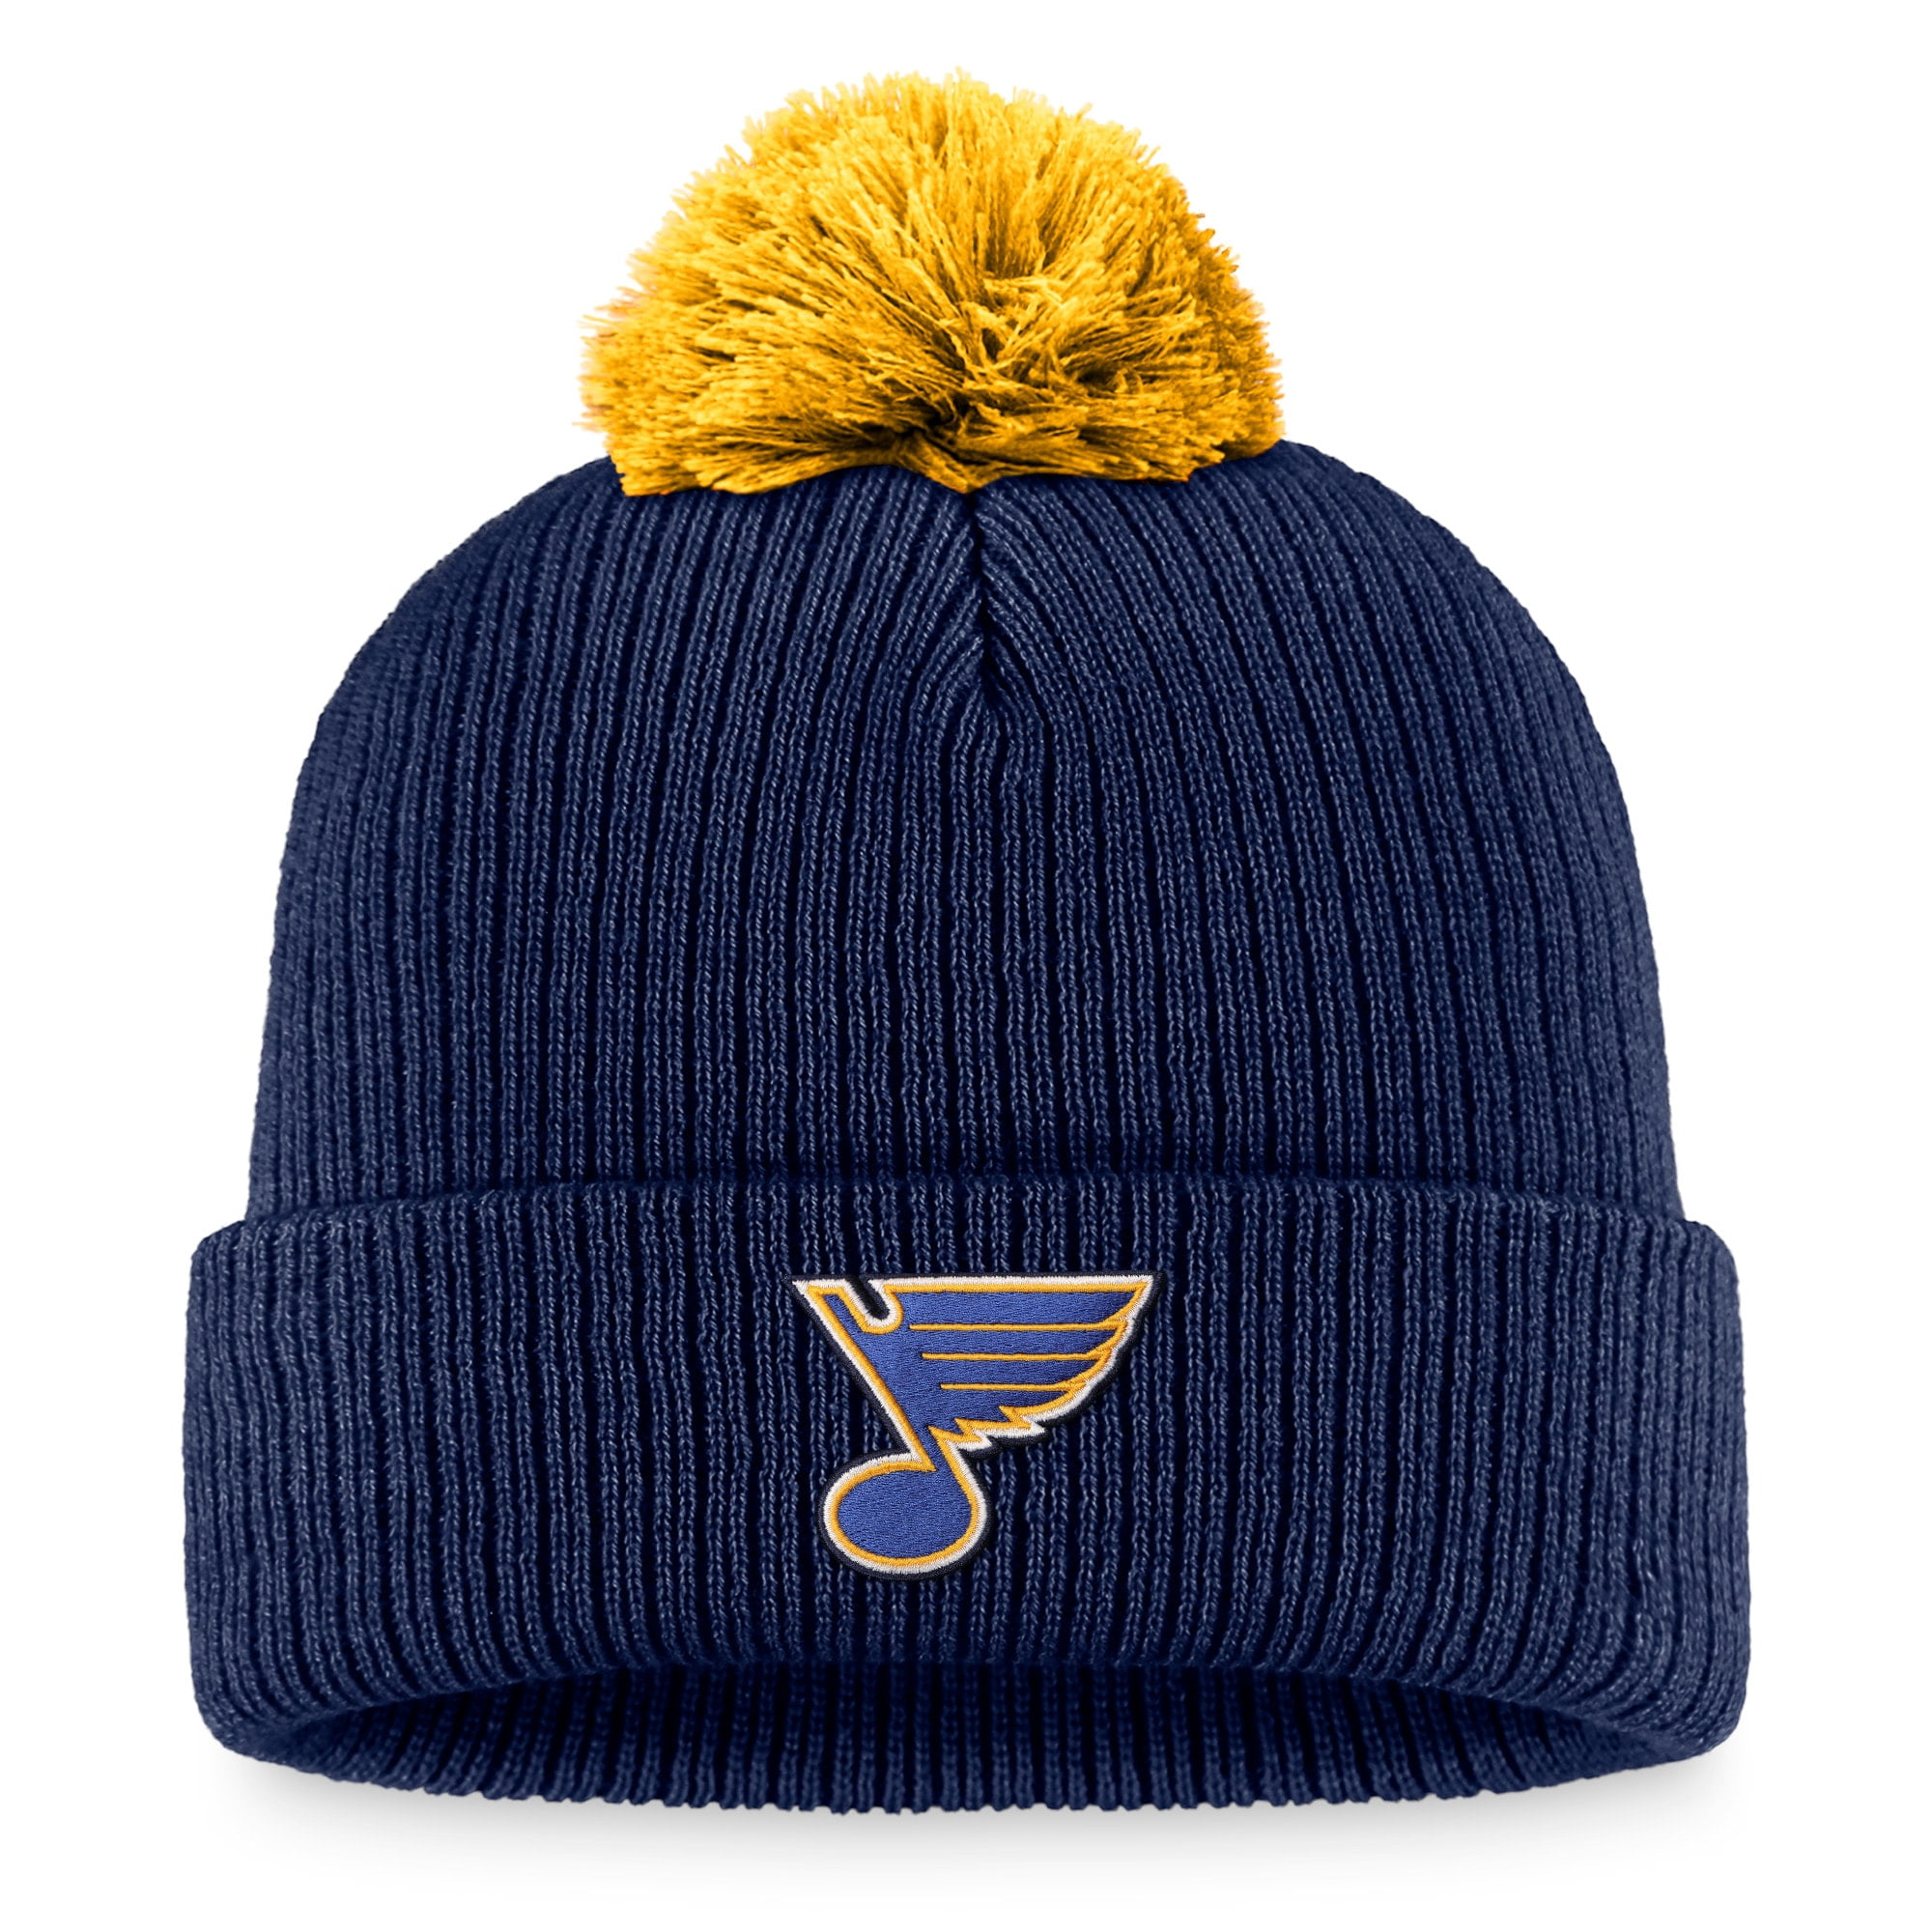 Men's Fanatics Branded Navy St. Louis Blues Team Cuffed Knit Hat with Pom -  OSFA 